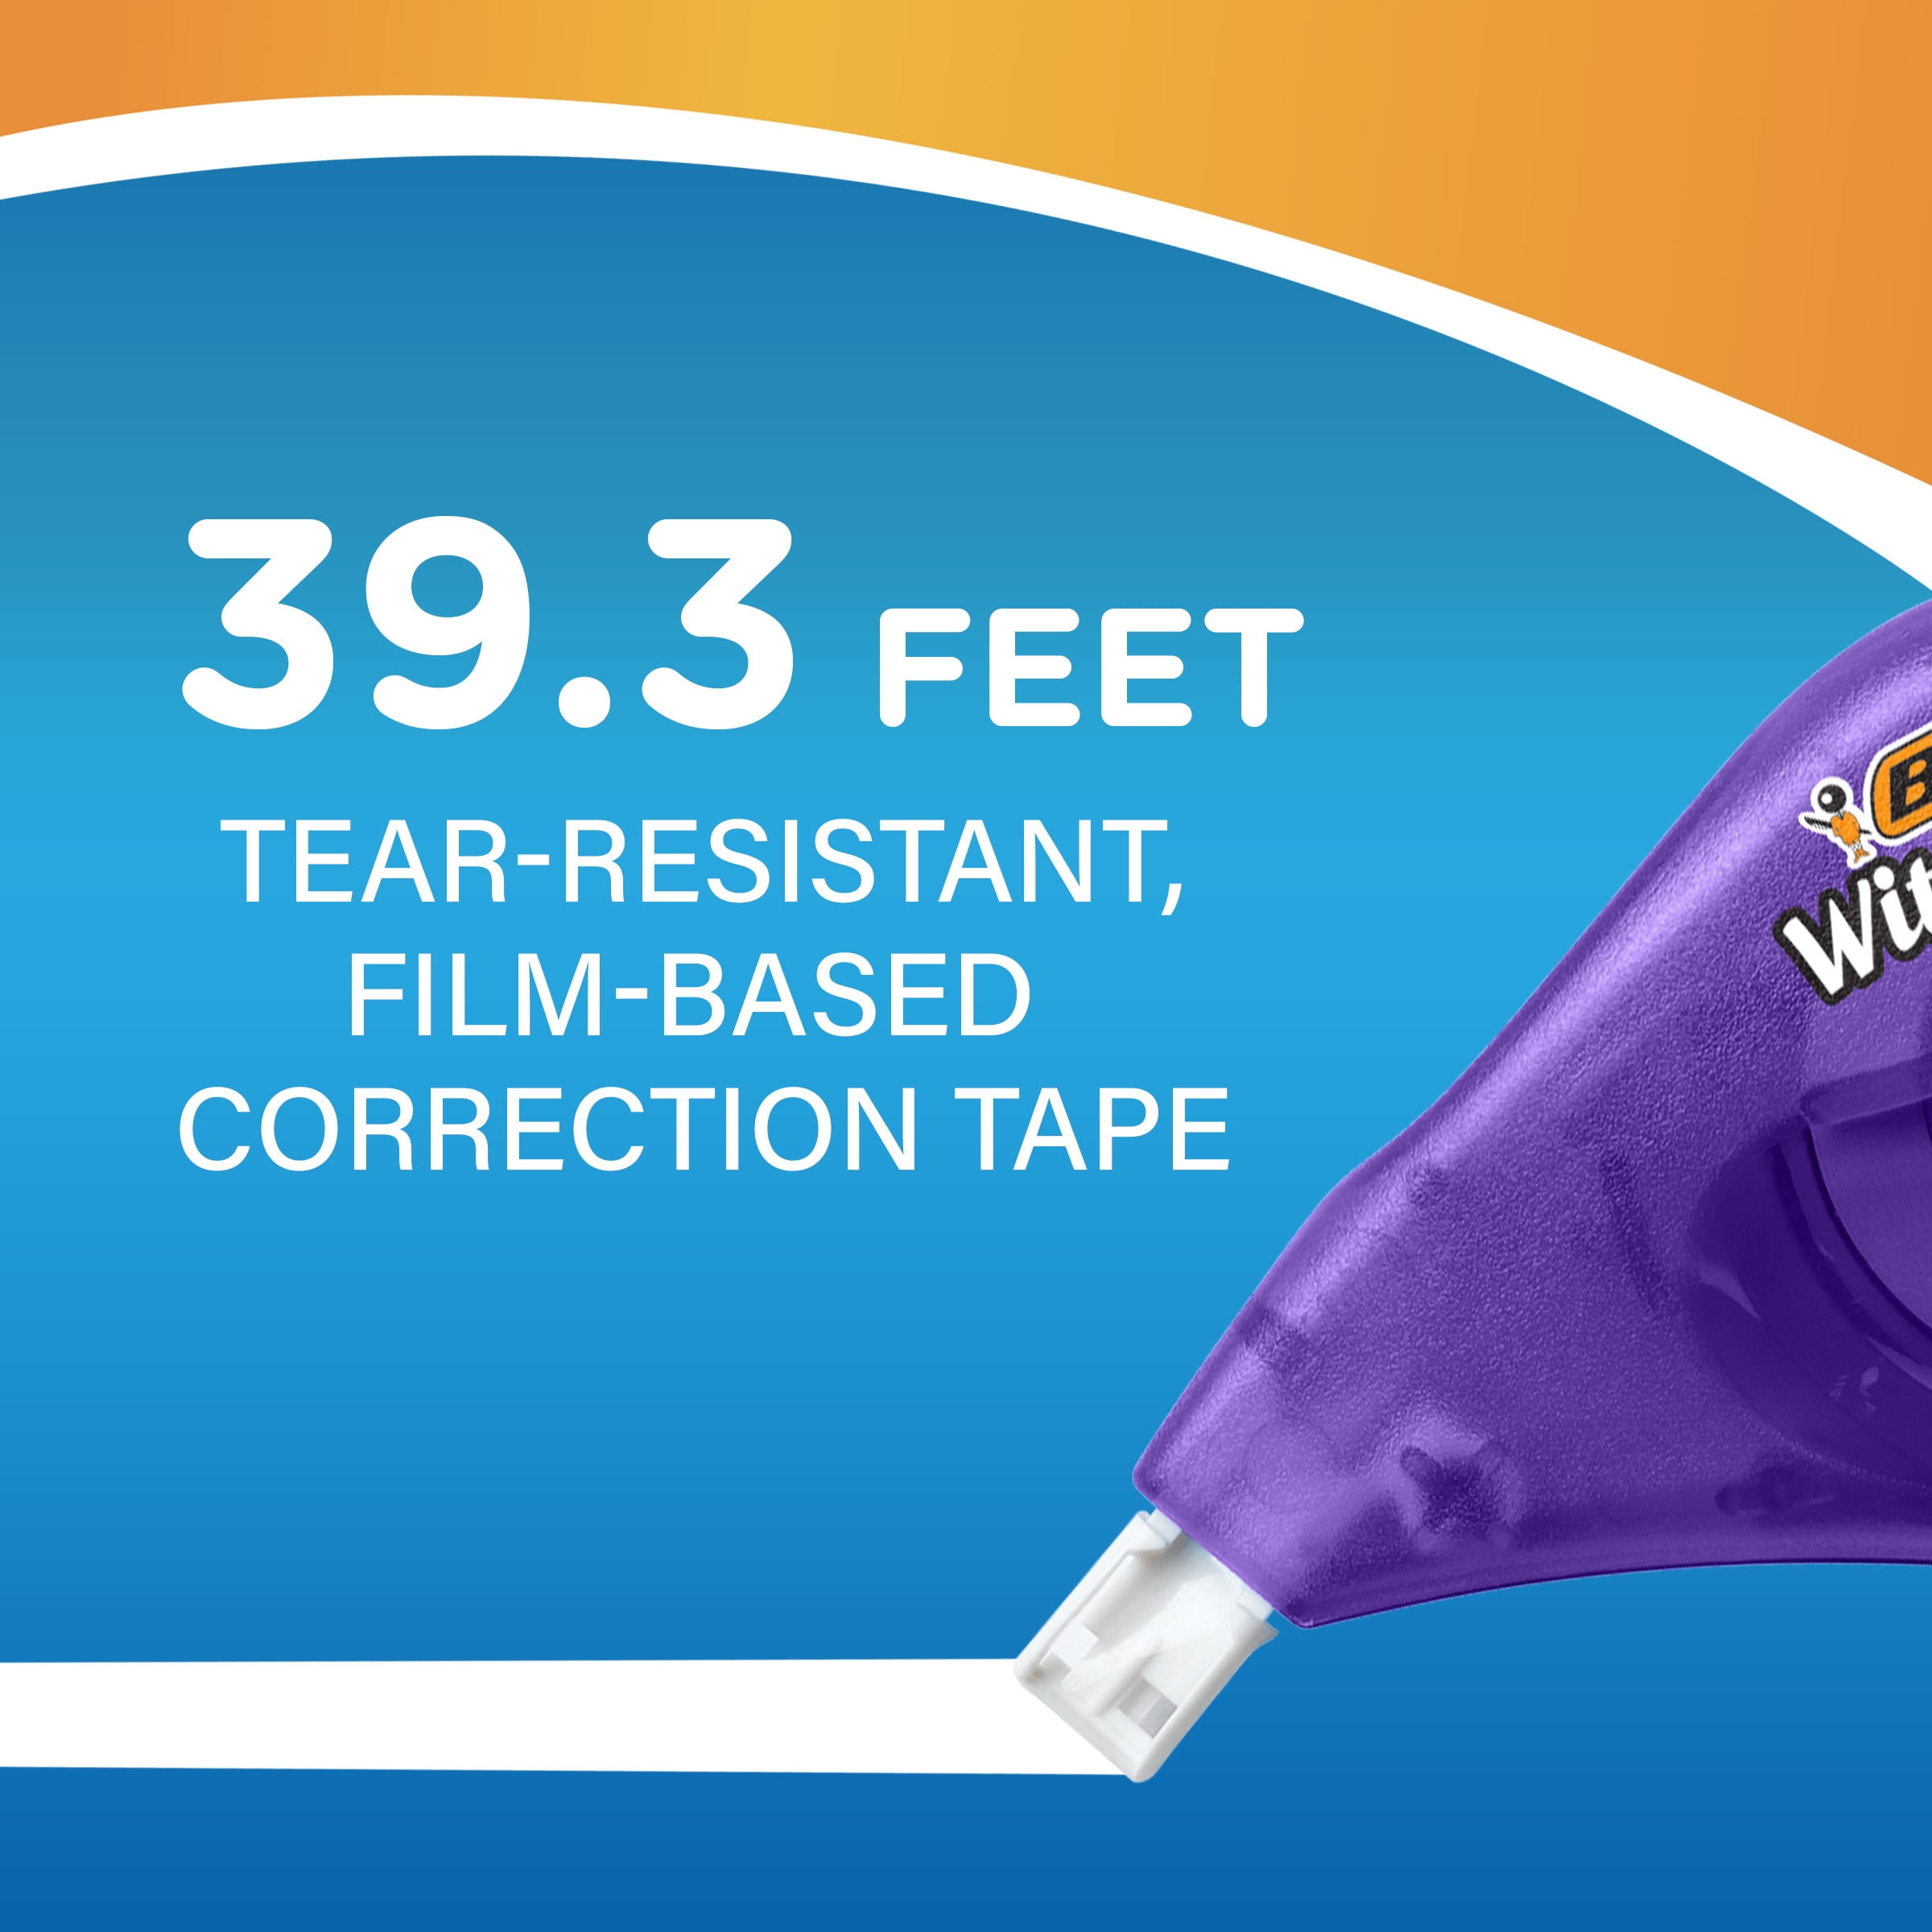 BIC Wite-Out Ez Correct Correction Tape Value Pack, Non-Refillable, 1/6 X  472, 10/box - Mfr Part# WOTAP10